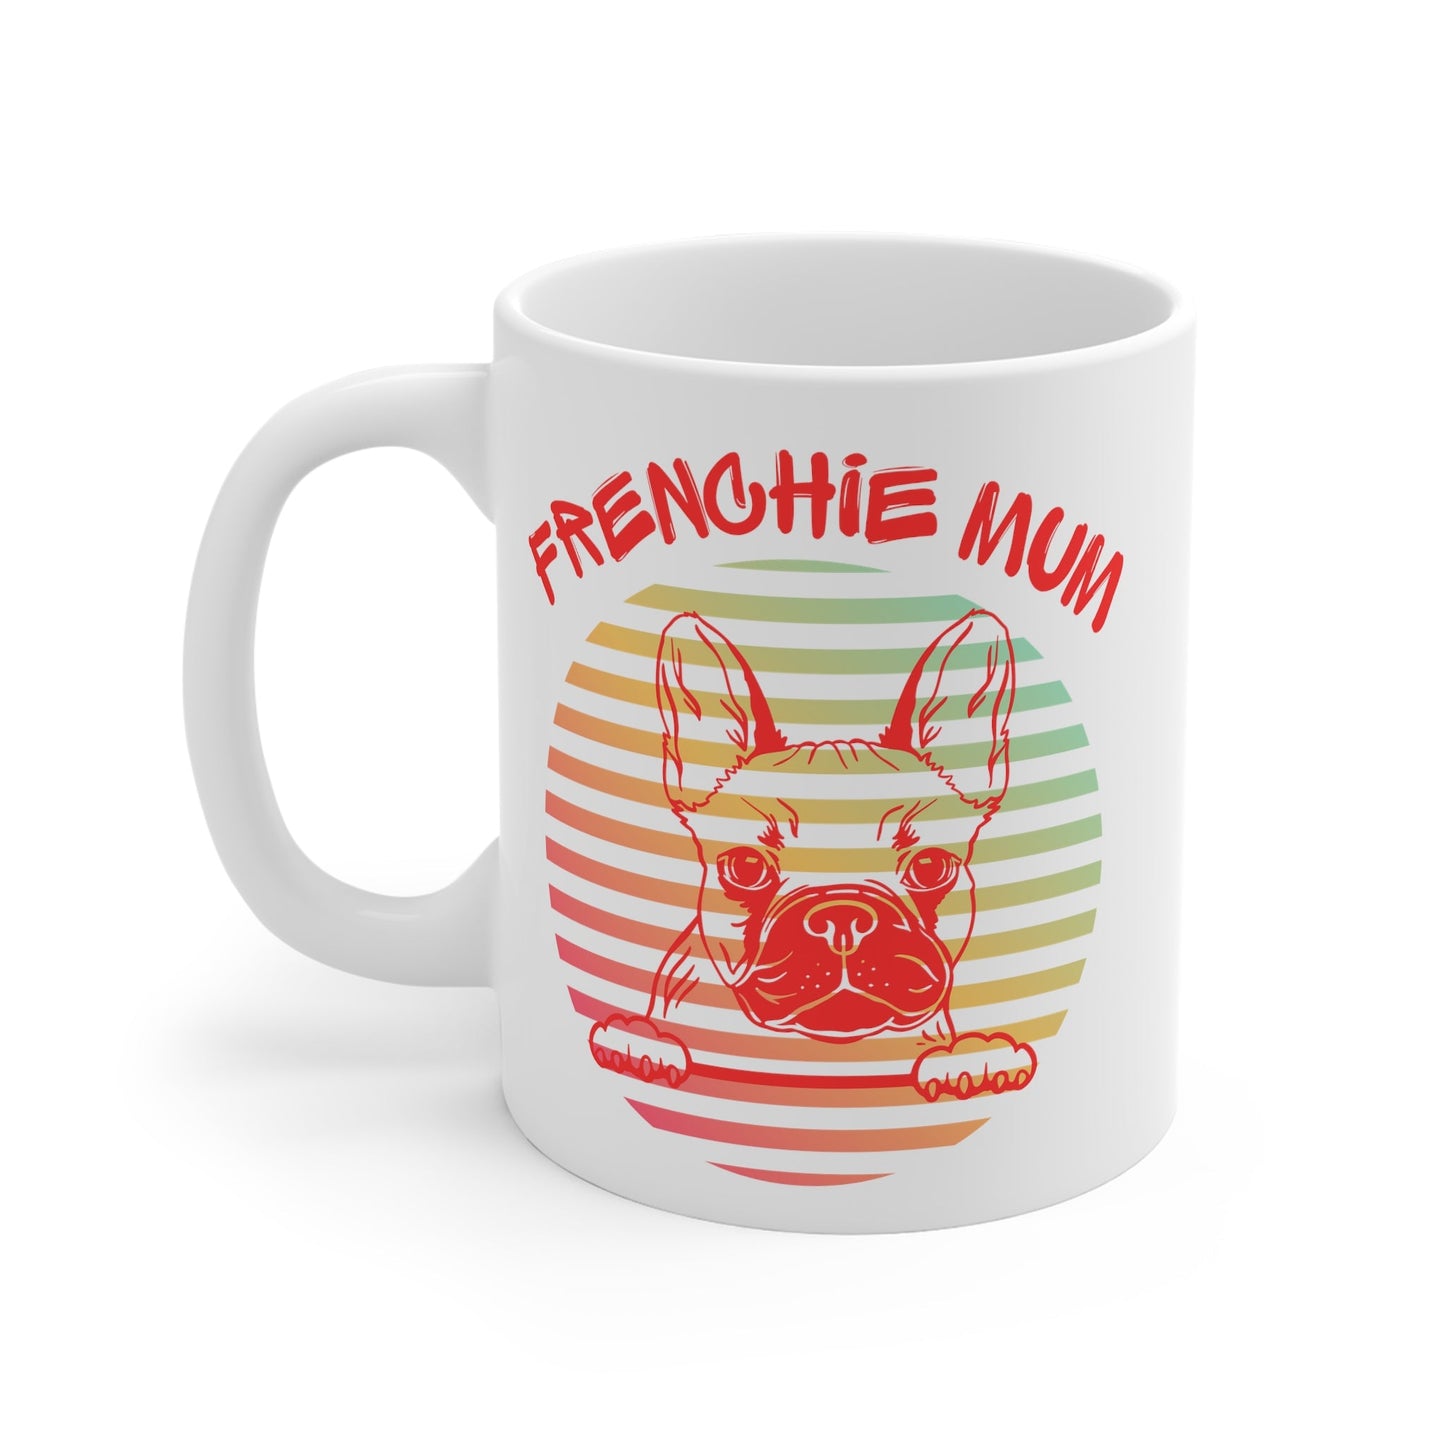 Frenchie Mum White Mug - Designs by DKMc